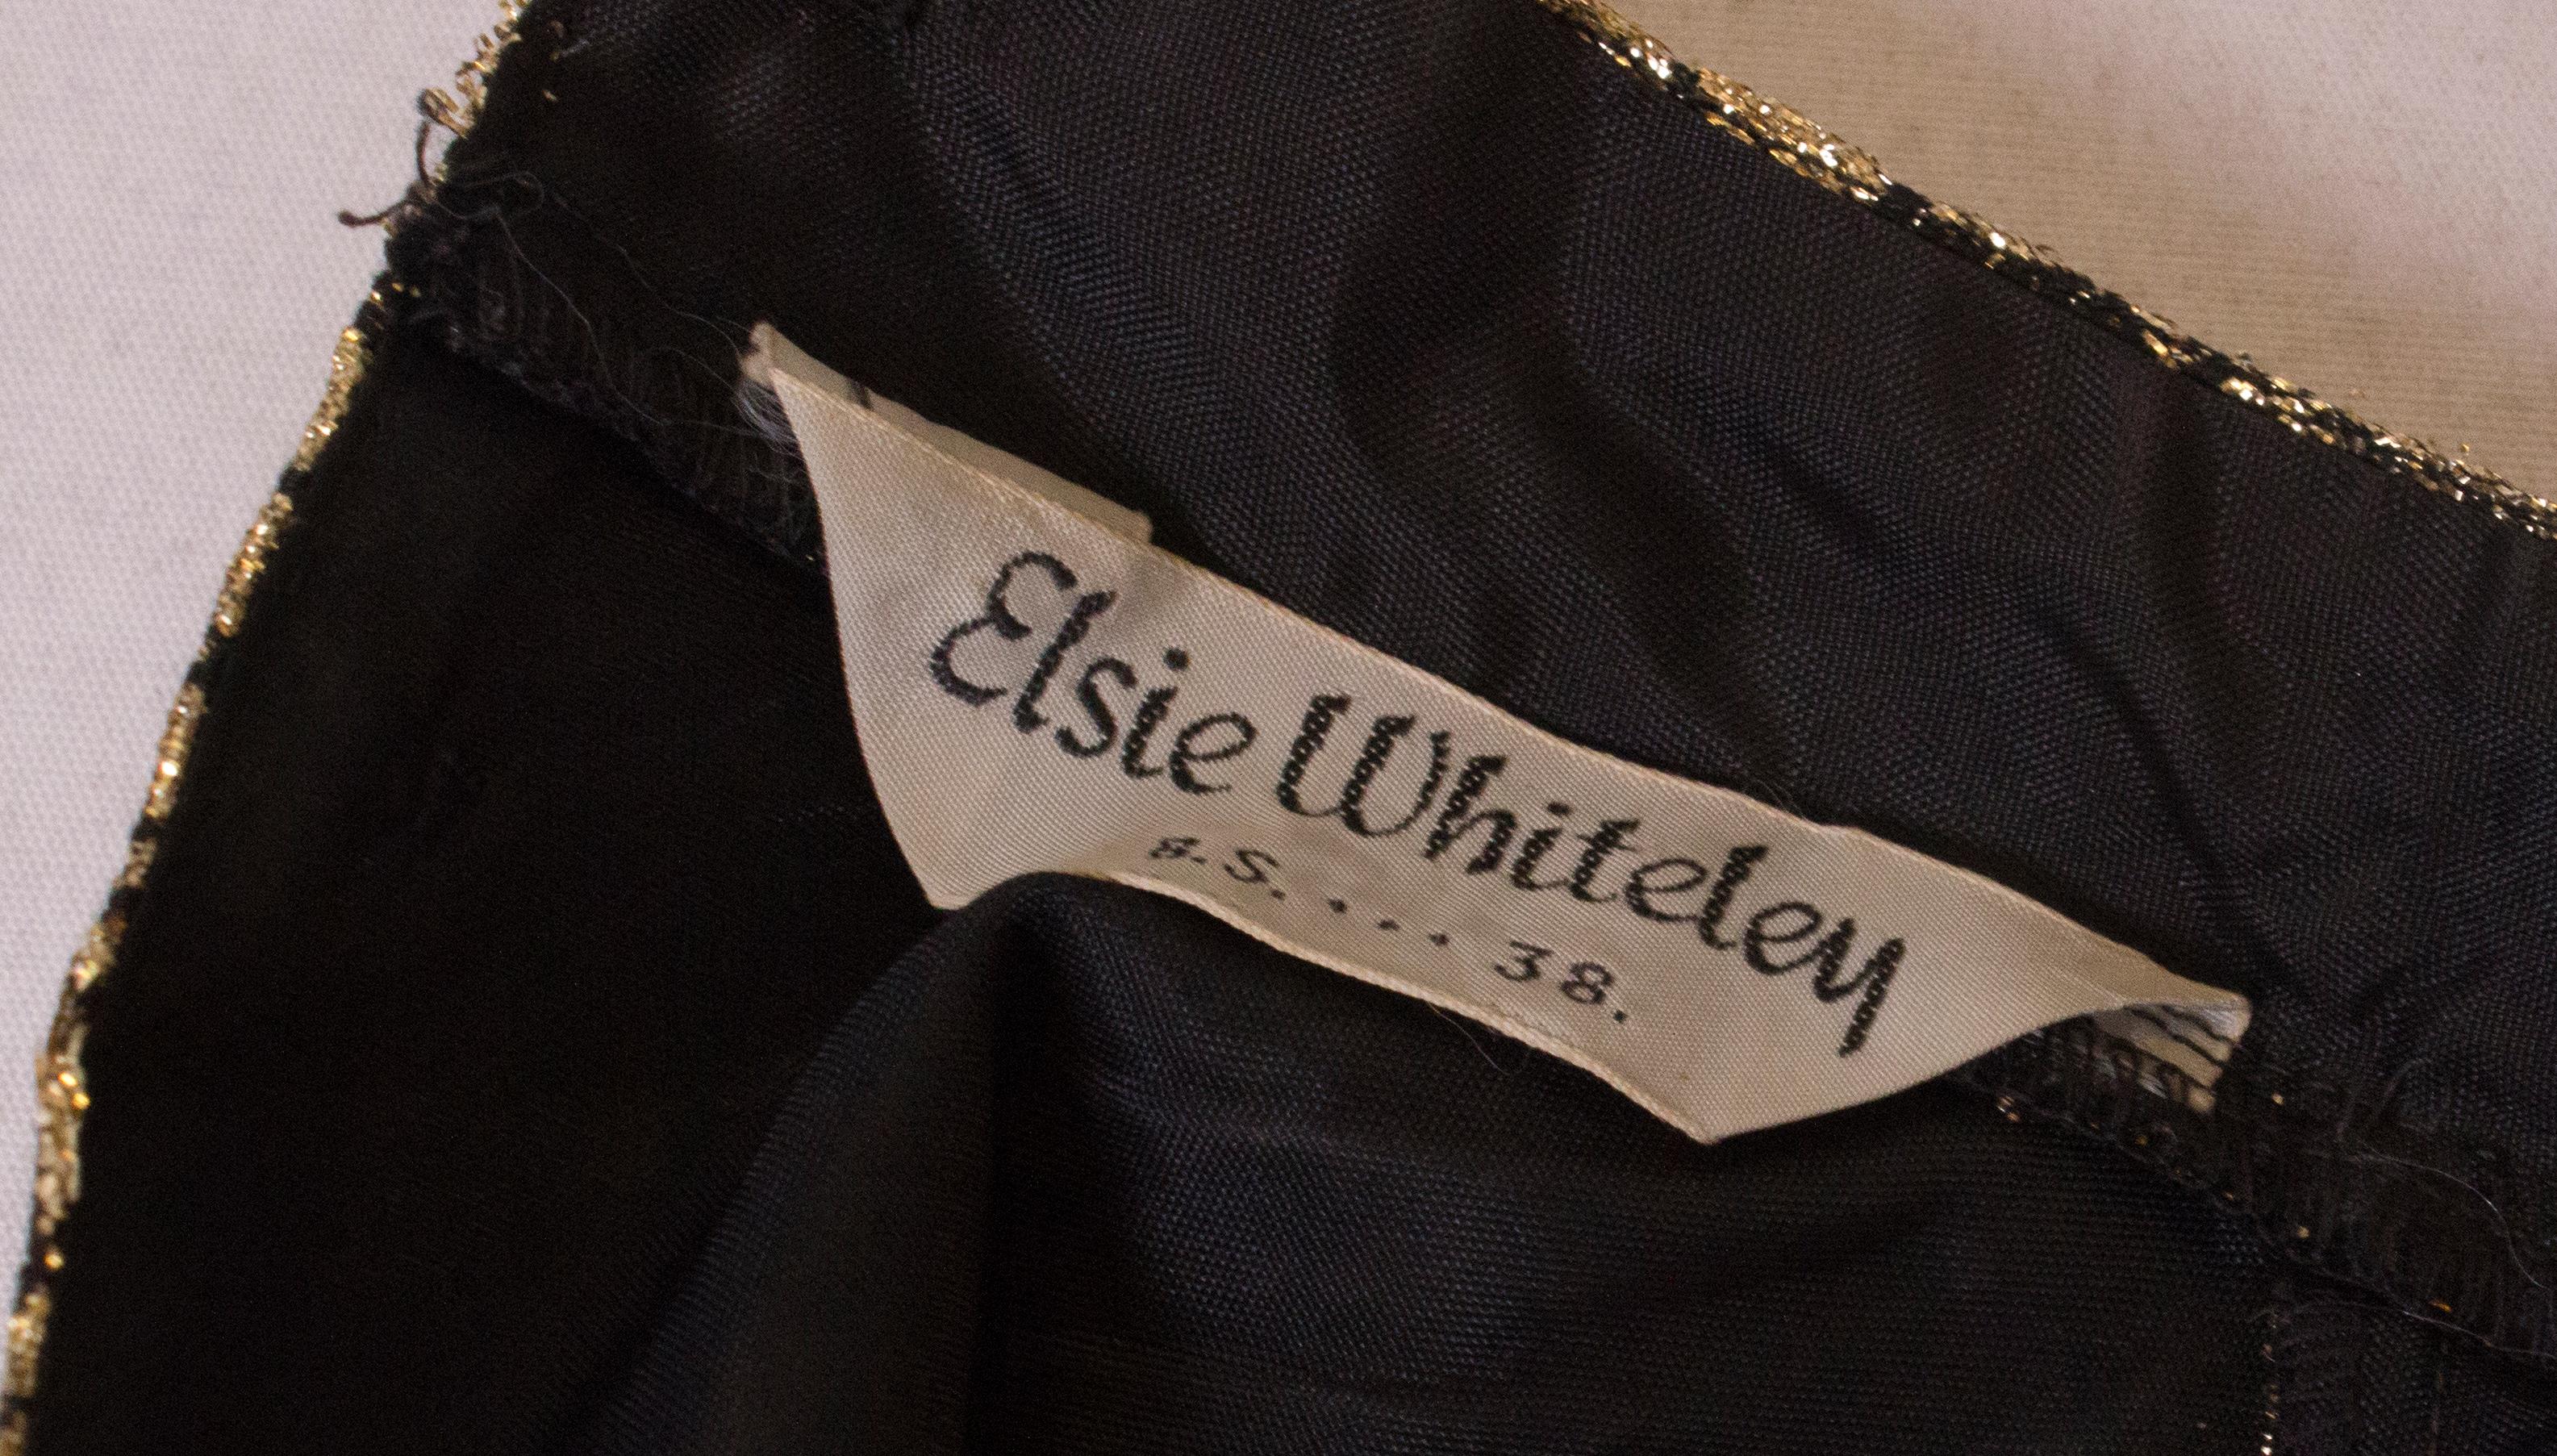 Vintage Elsie Whiteley Evening Top 3